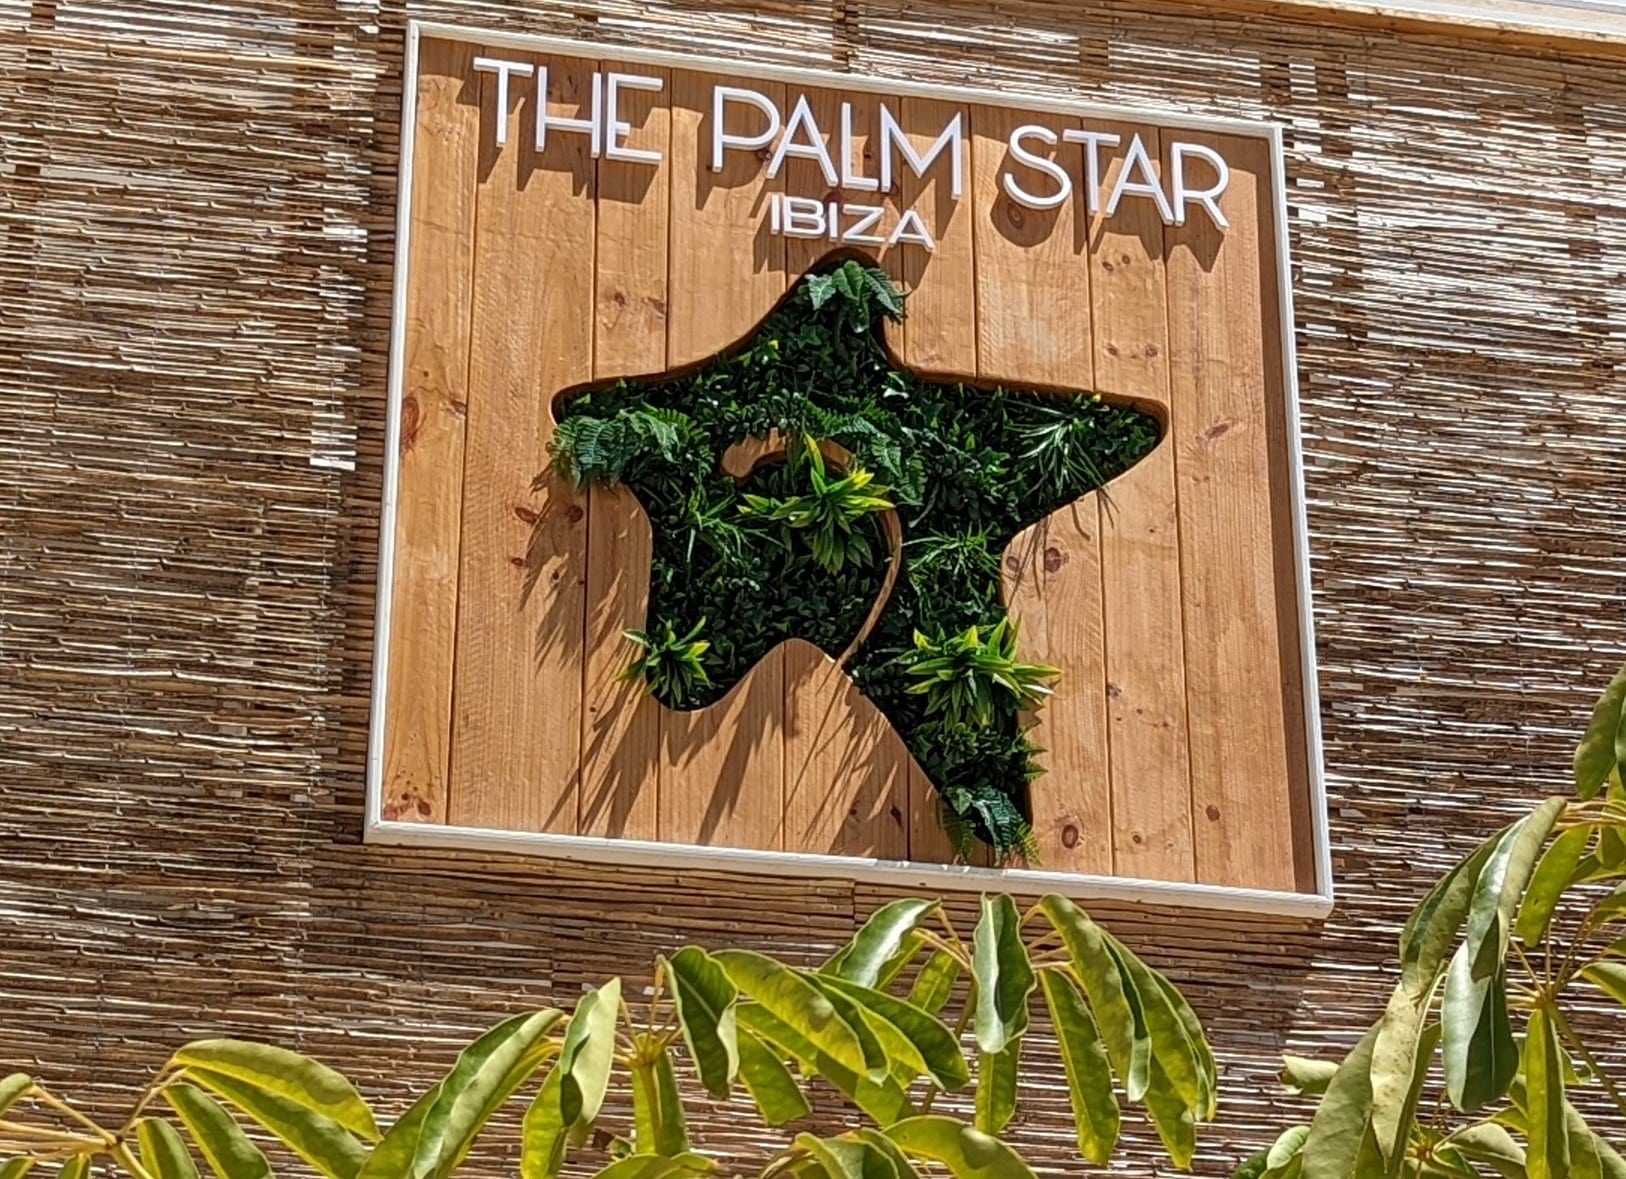 Galeria de imagenes The Palm Star Ibiza